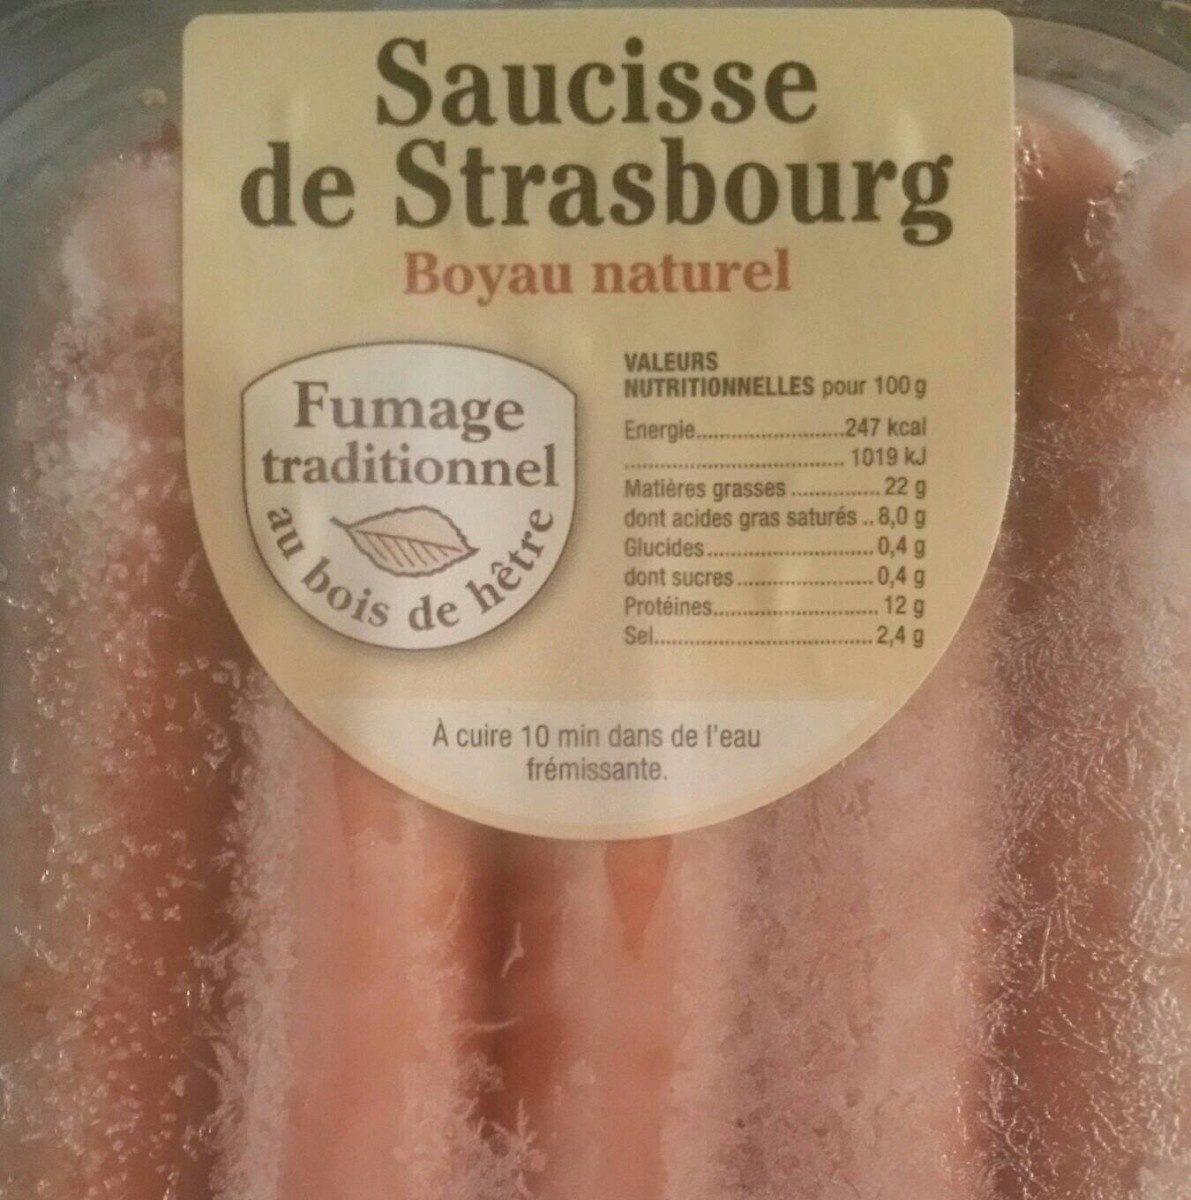 Saucisse de Strasbourg - boyau naturel - Product - fr